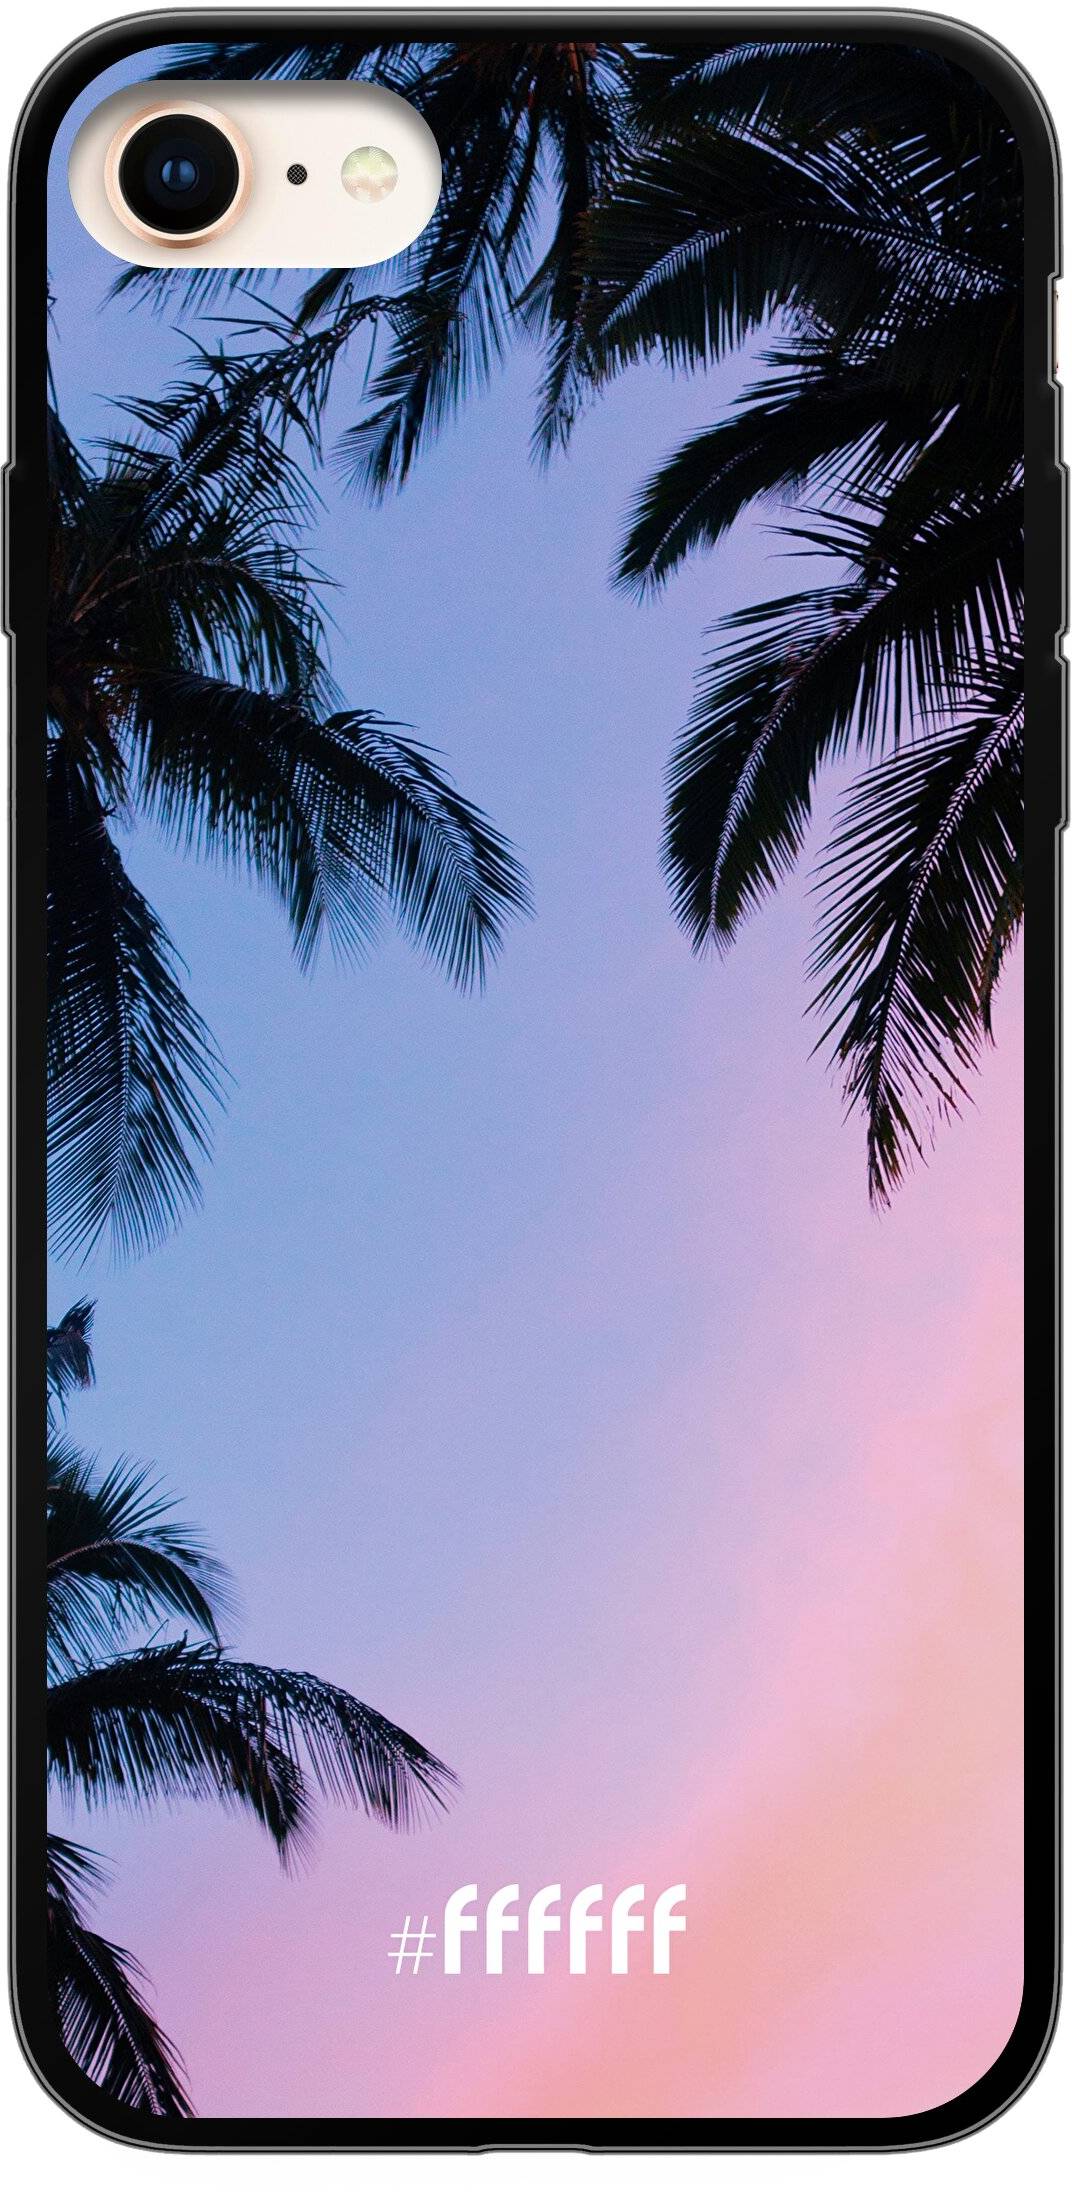 Sunset Palms iPhone 7